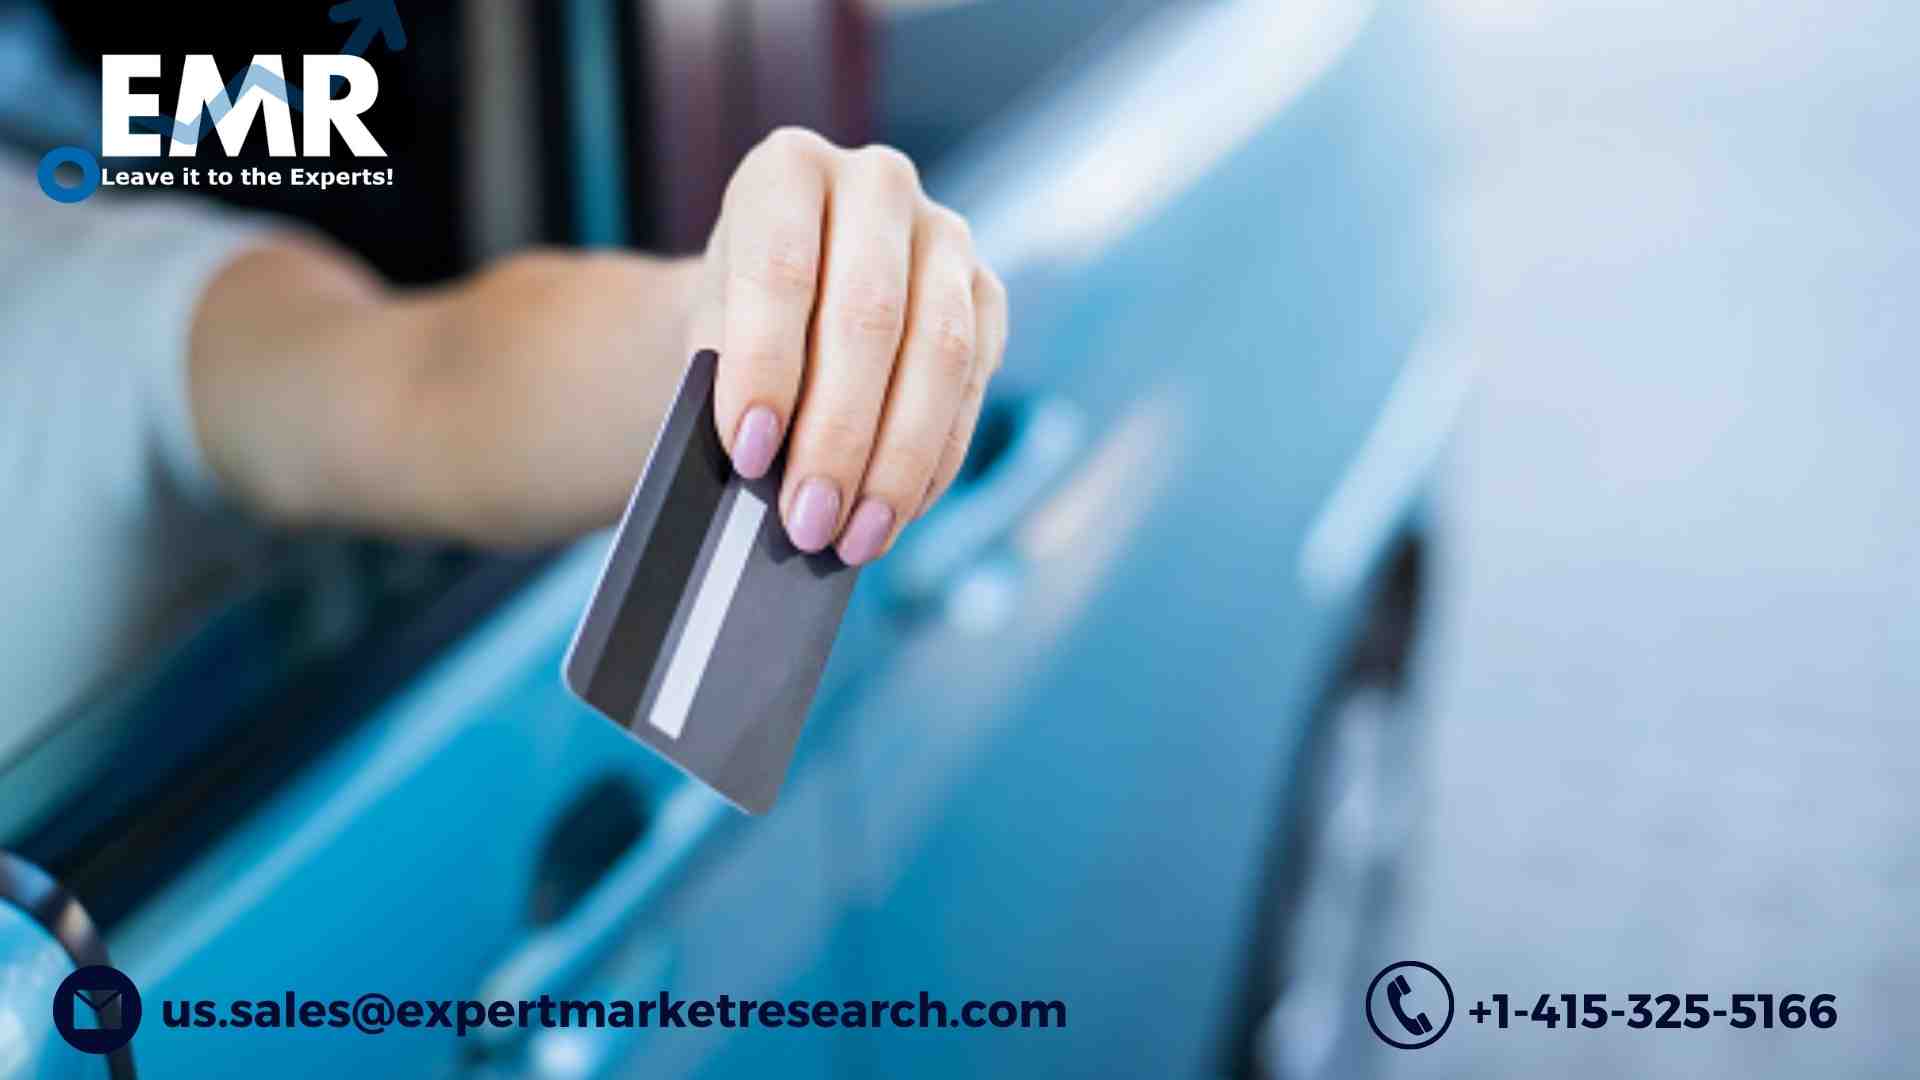 European Fuel Card Market